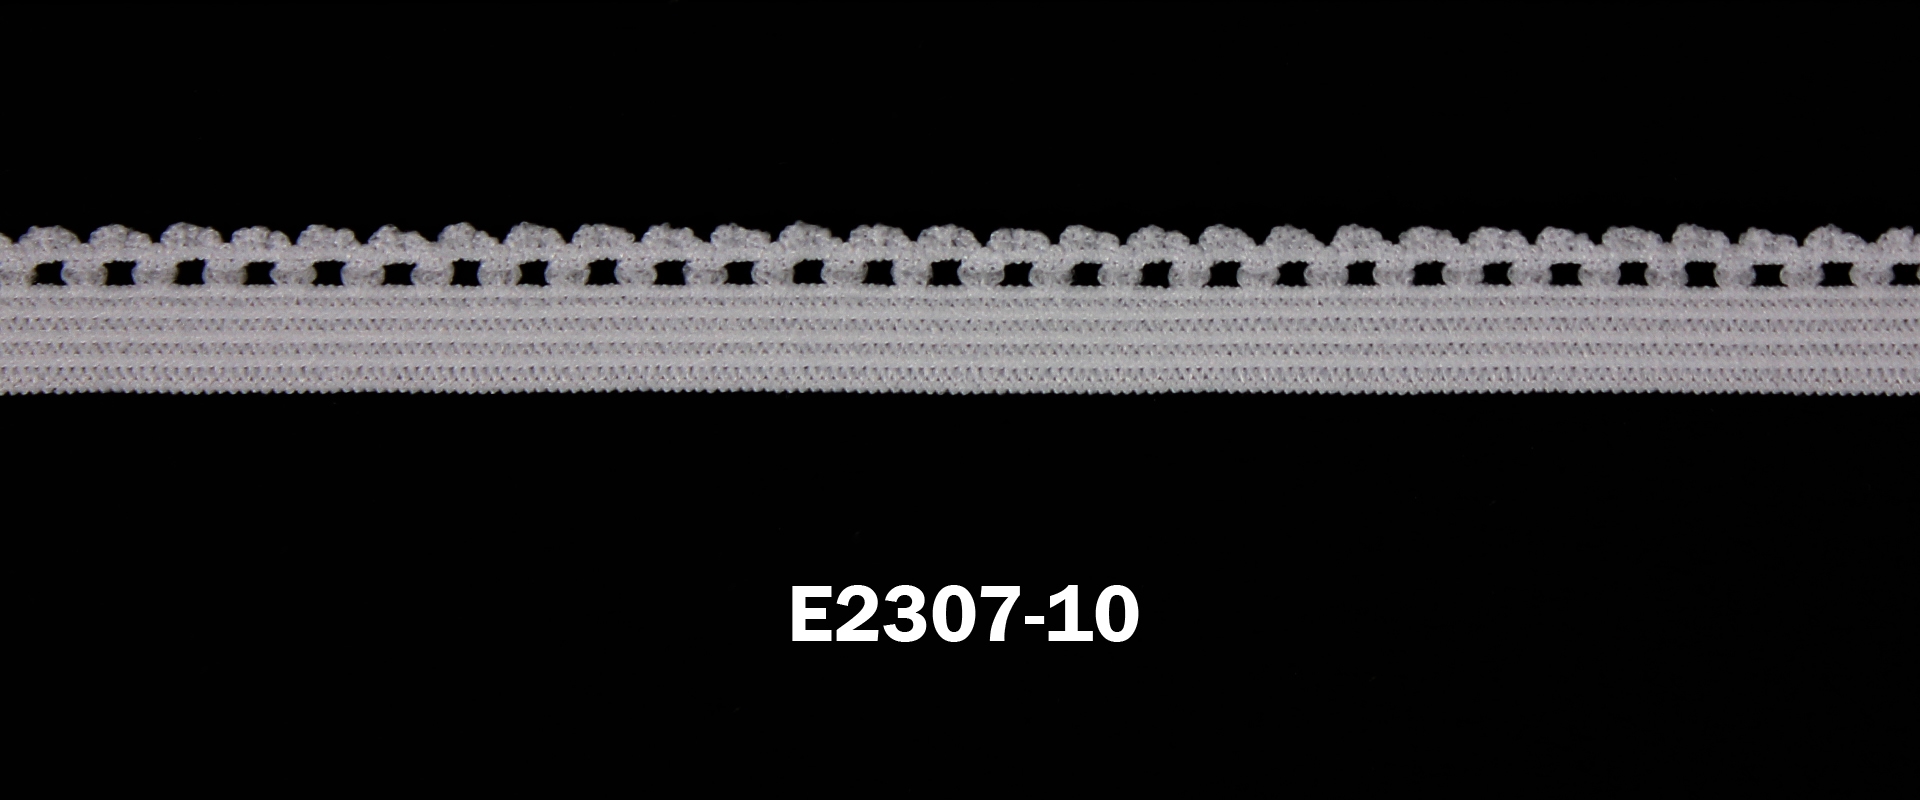 e2307-10